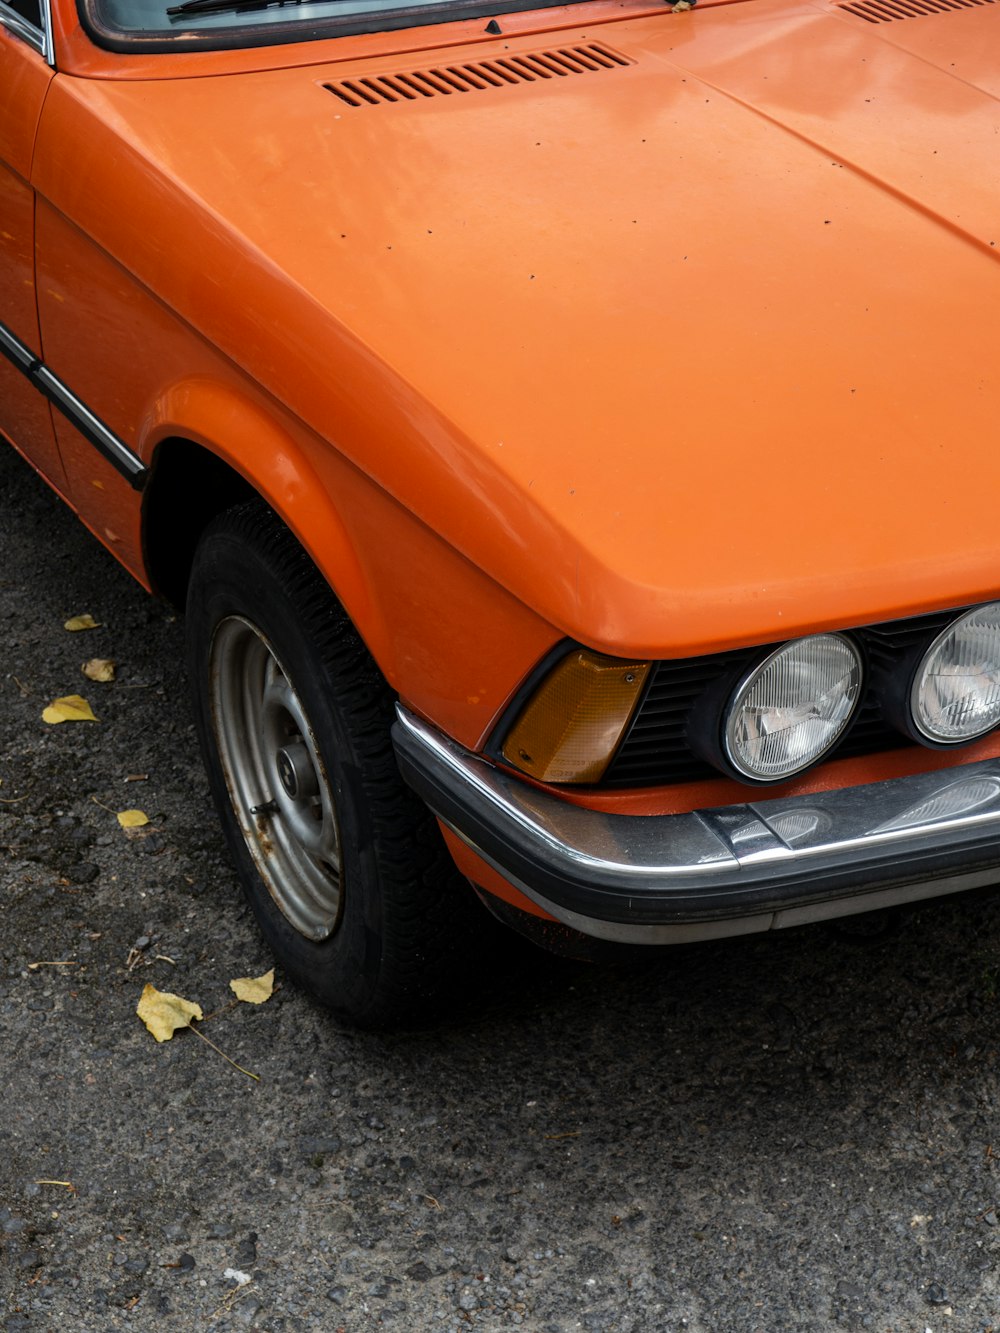 orange car on gray concrete pavement